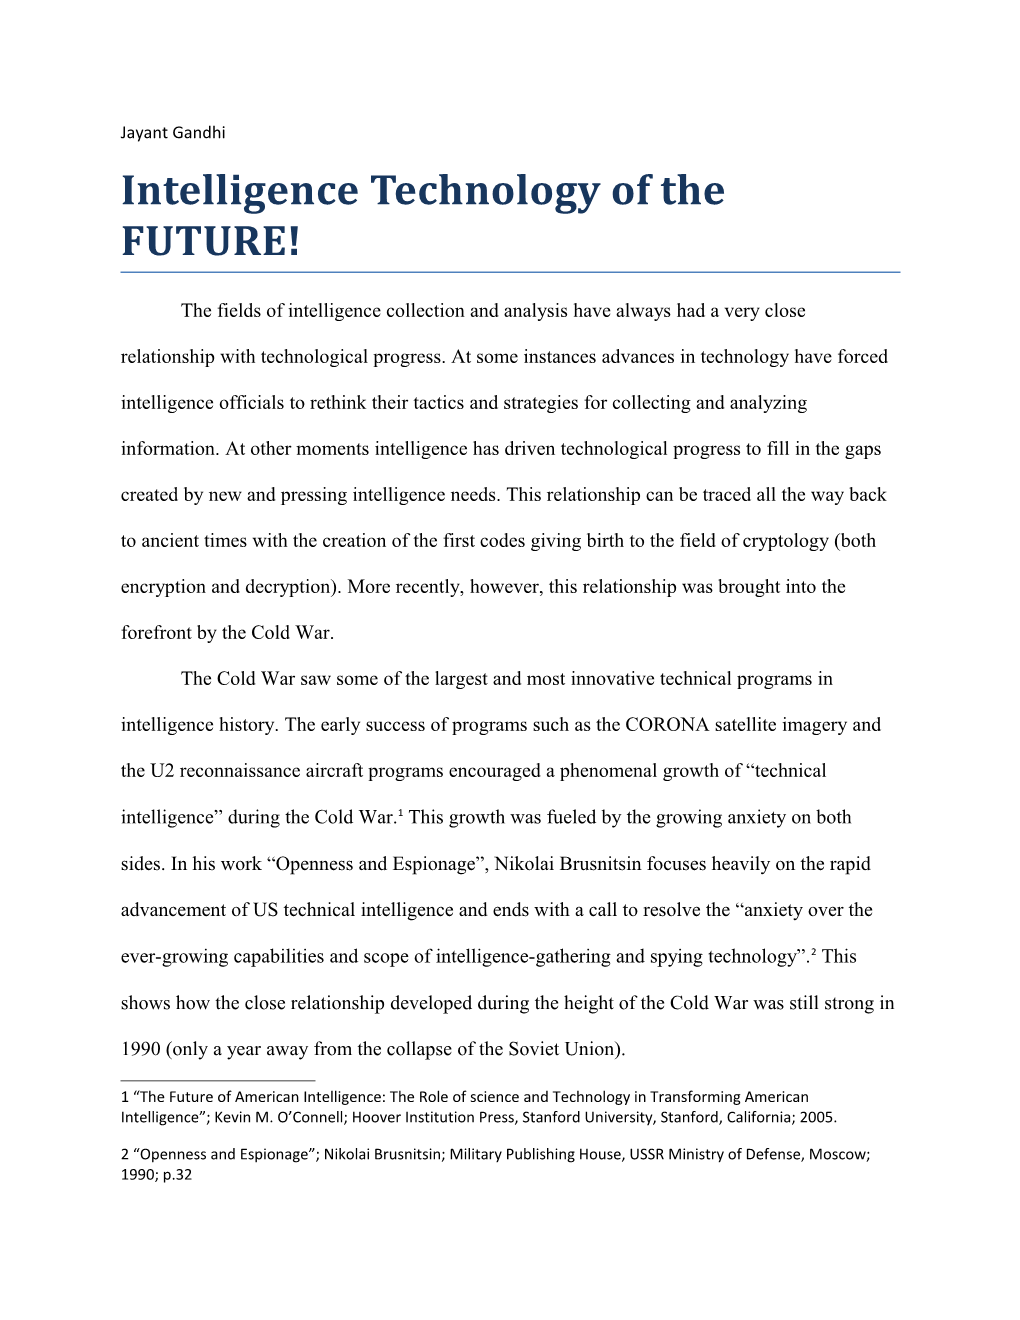 Intelligence Technology of the FUTURE!